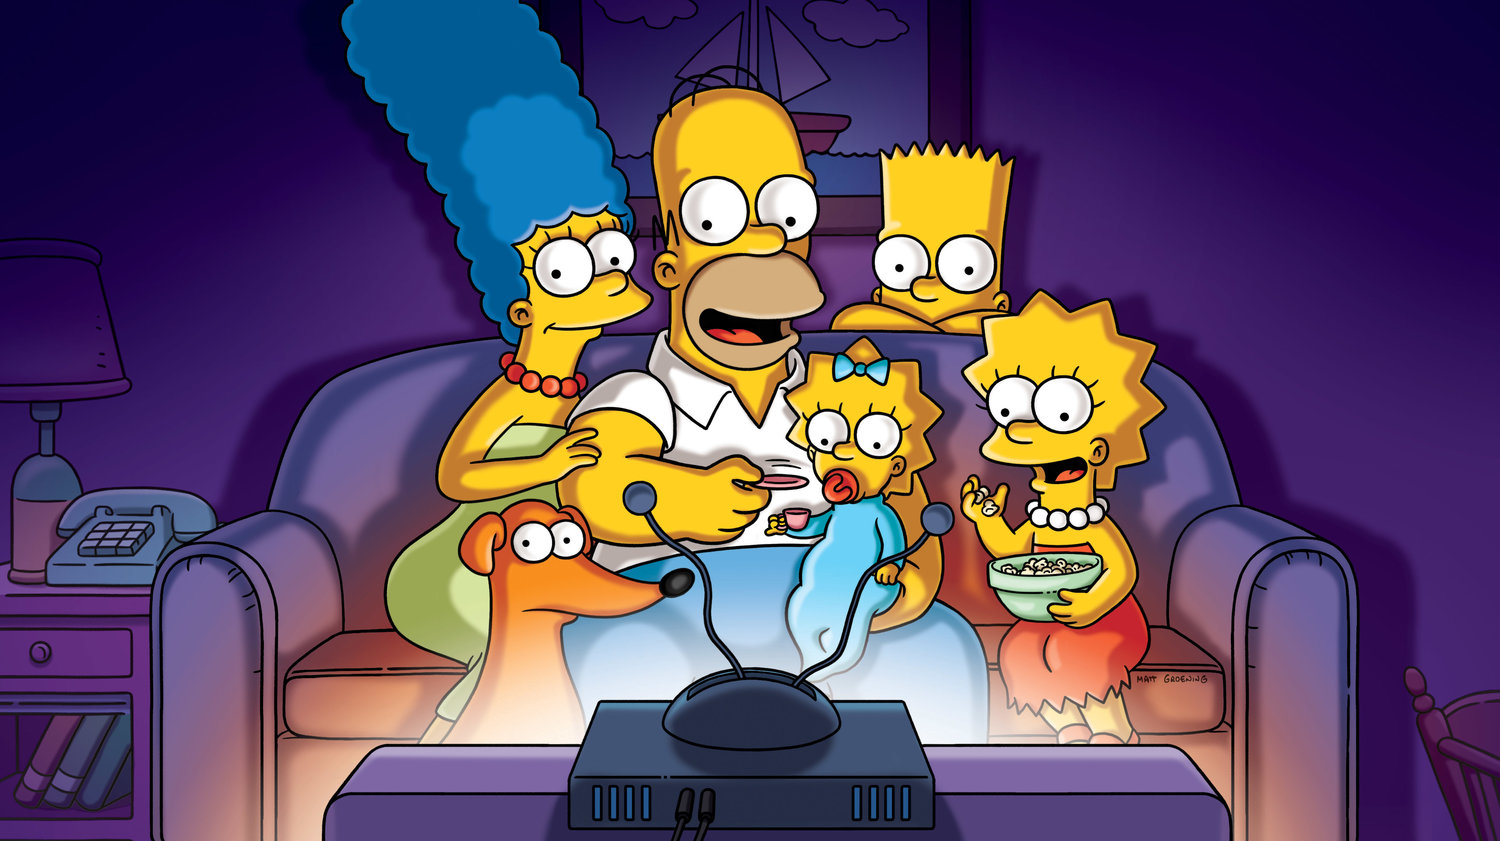 SimpsonsBG_2013_R1d.jpg